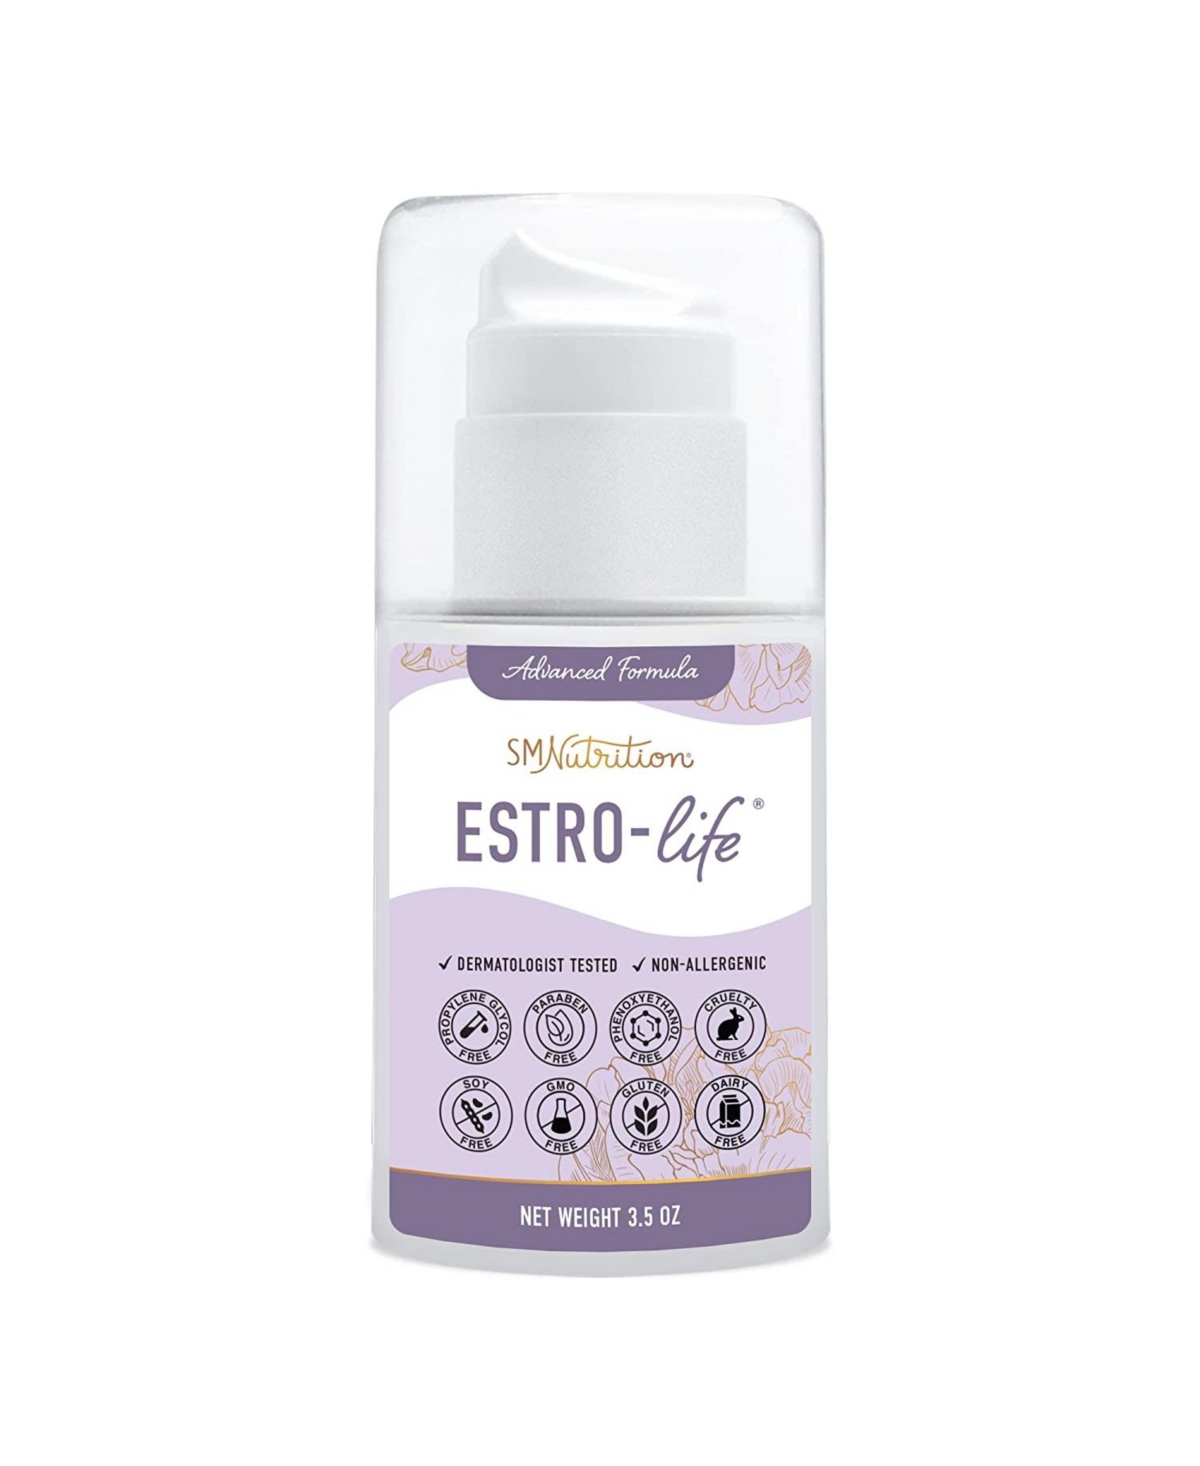 Paraben-Free Estrogen Estriol Cream (84 Servings, 3.5oz Pump) 175mg of Usp Micronized Estriol - For Balance At MidLife - Dermatologist-Tested, Hypoall